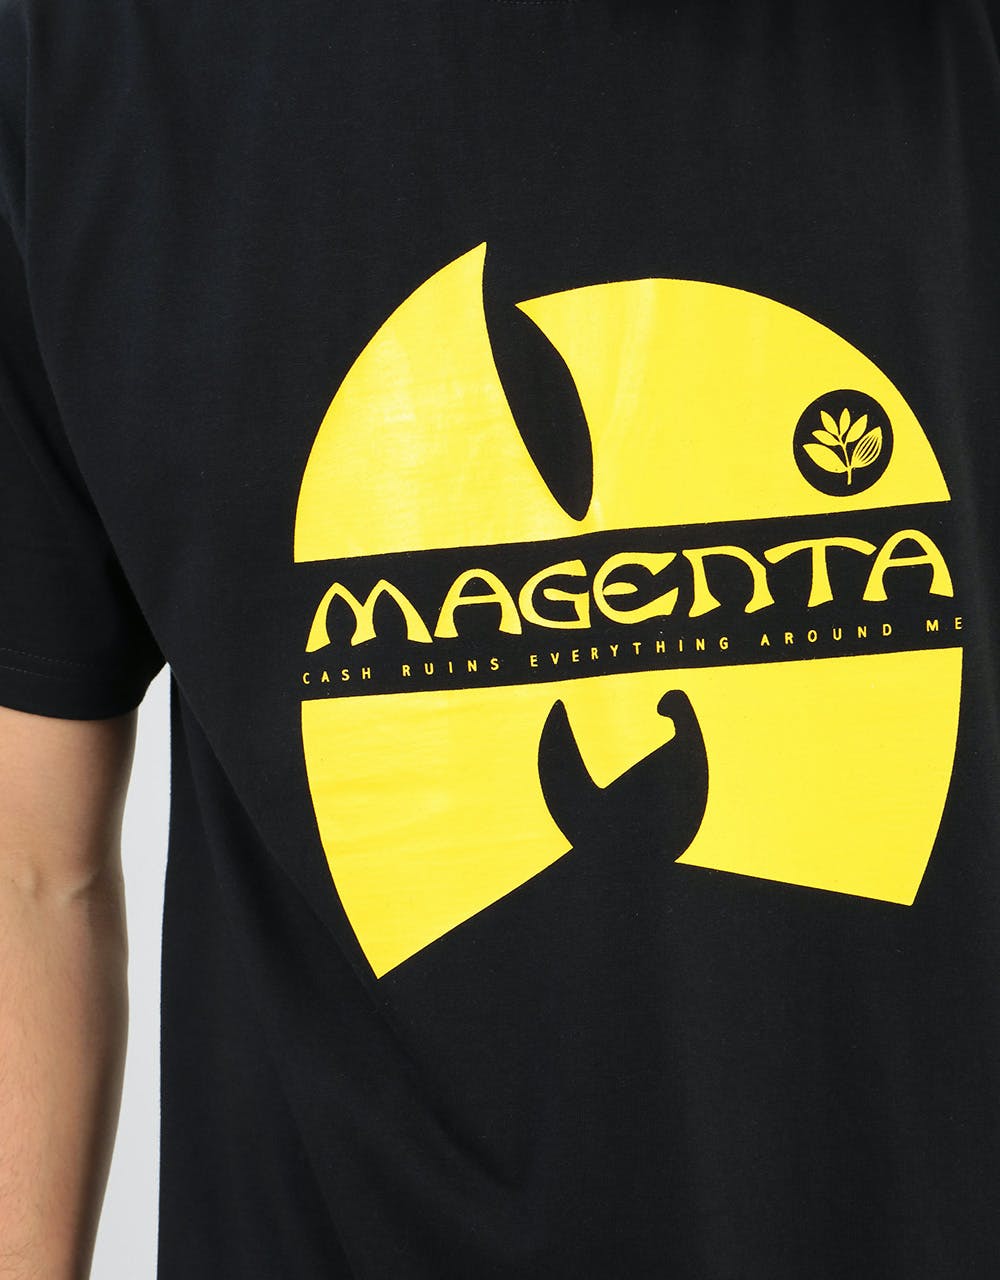 Magenta Wugenta T-Shirt - Black